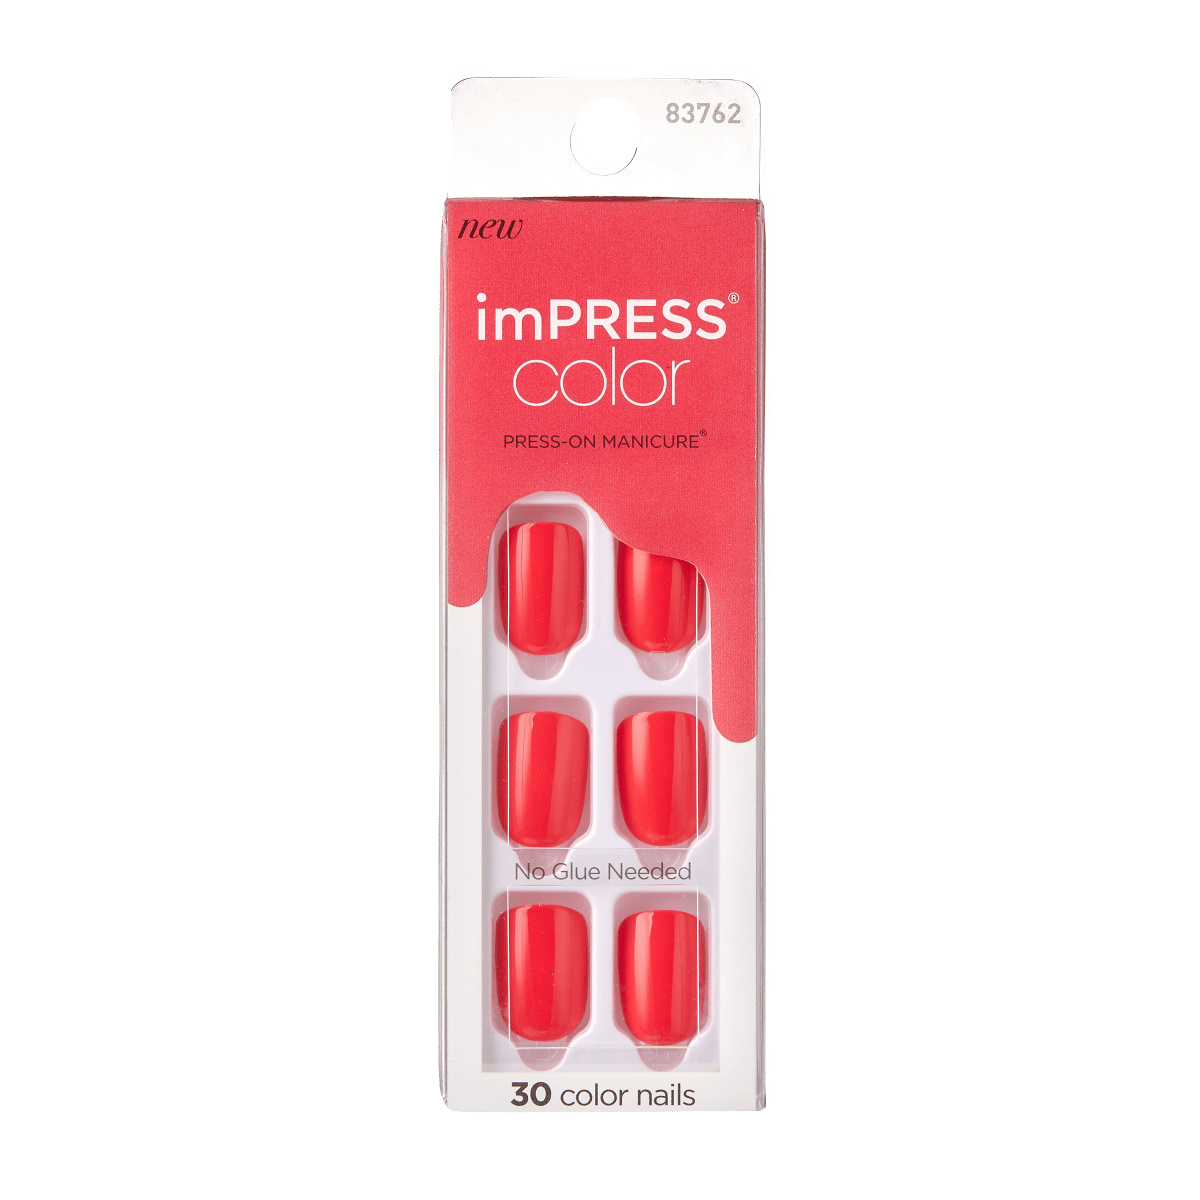 imPRESS Color Press-On Manicure - Corally Crazy